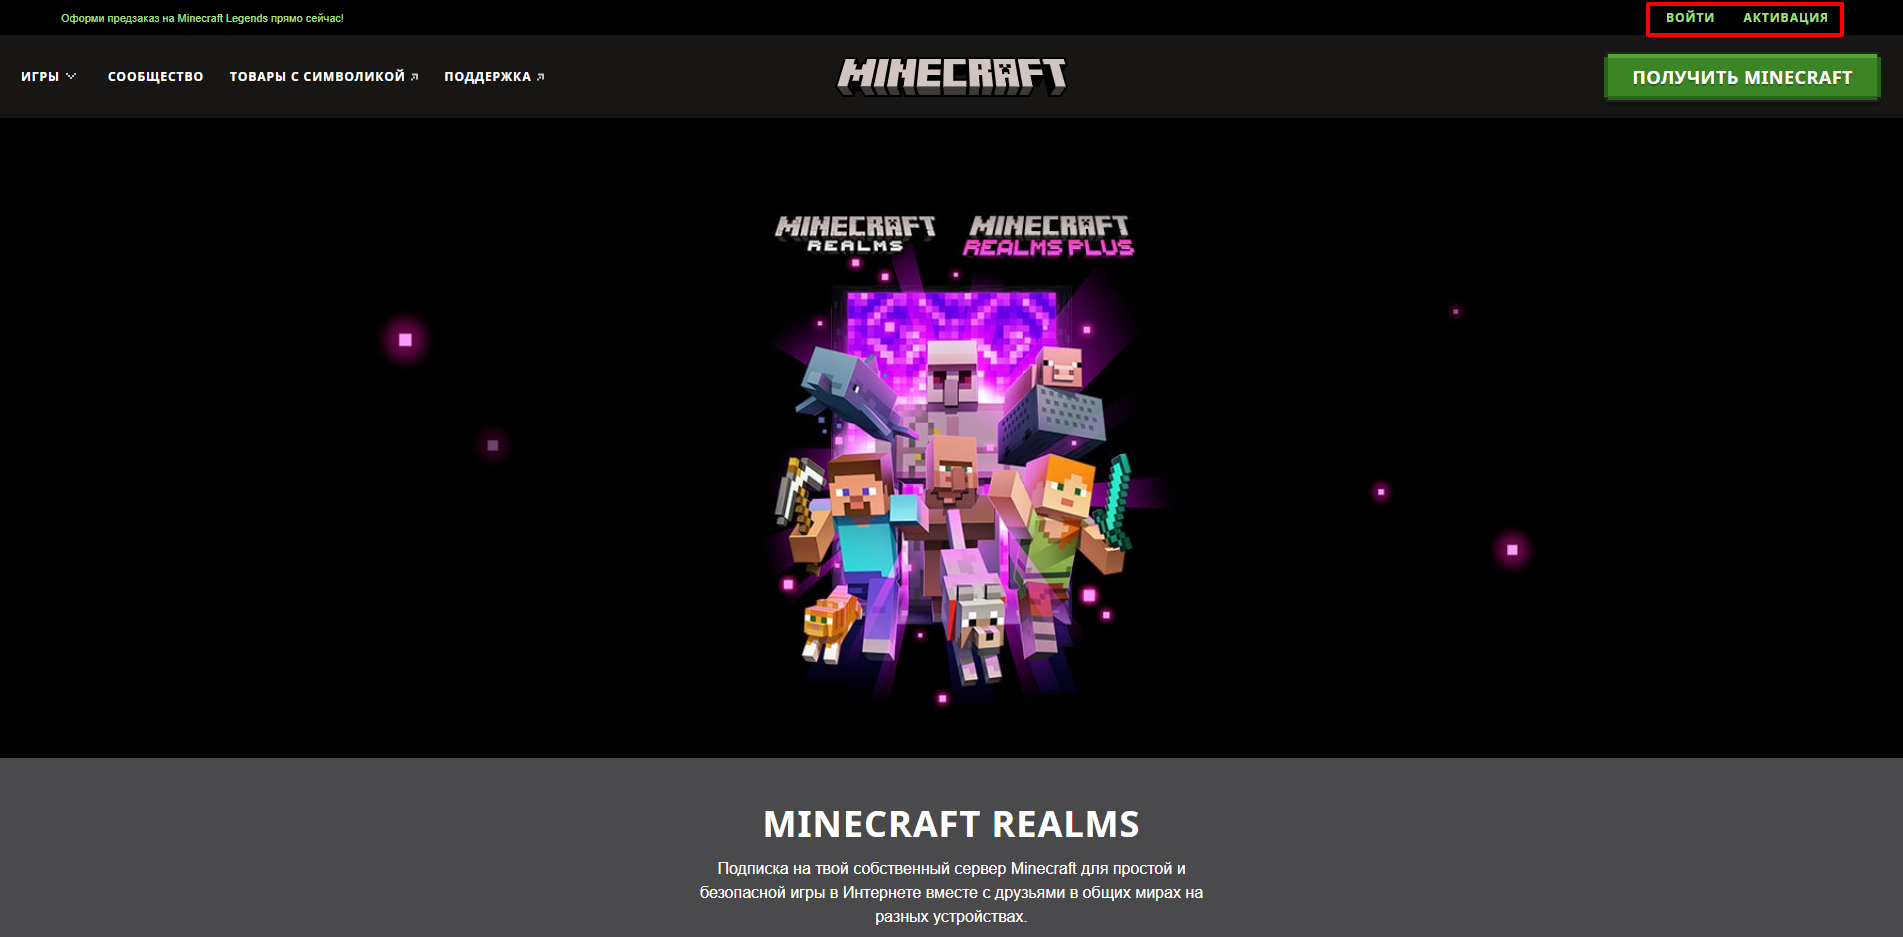 Не могу зайти с телефона на сервер Minecraft bedrock - Microsoft Community